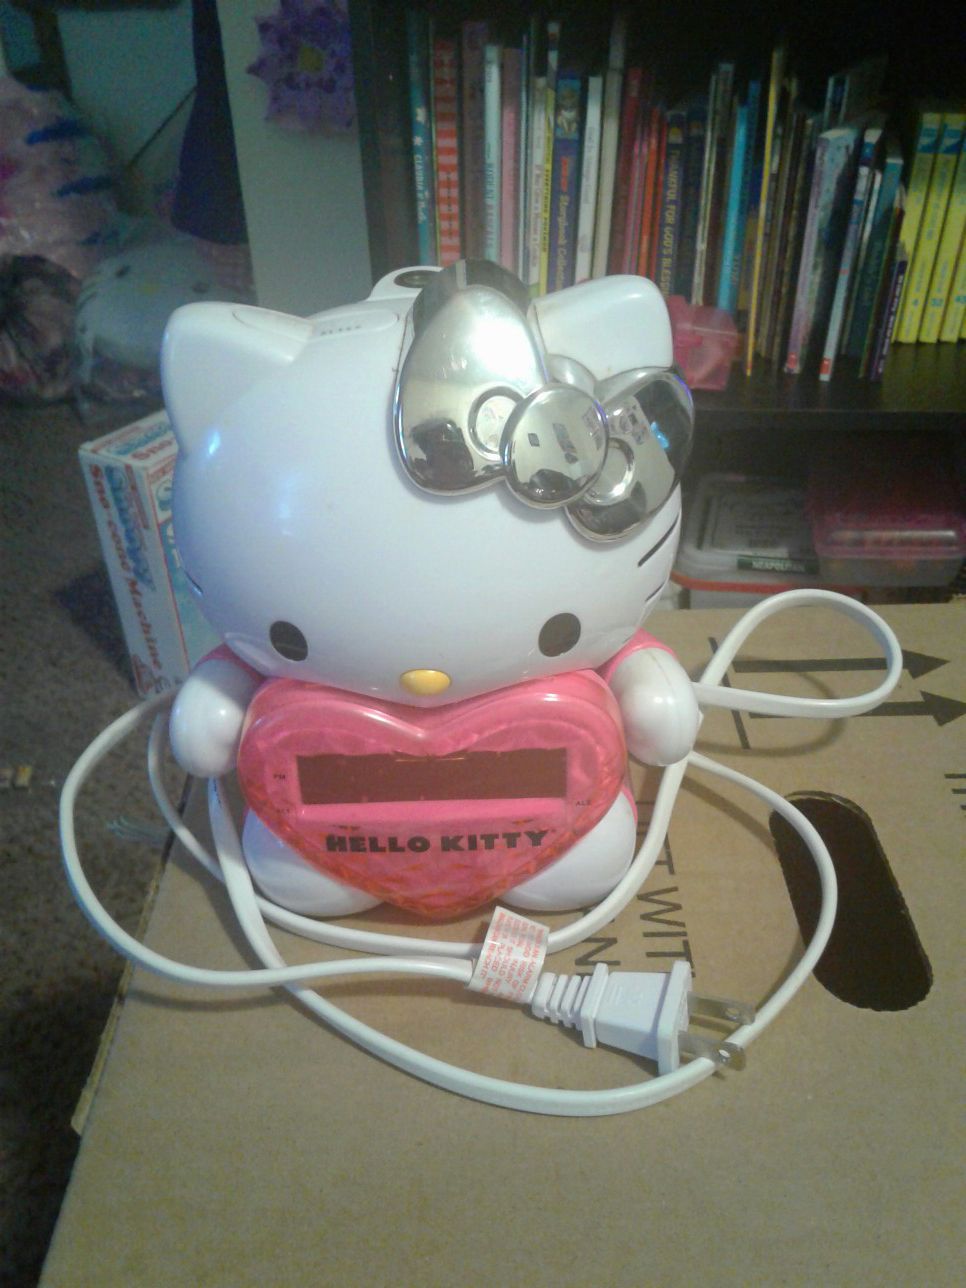 Hello Kitty alarm clock radio with ceiling projector, first aid kit, walkie talkie & earmuffs & glove set.